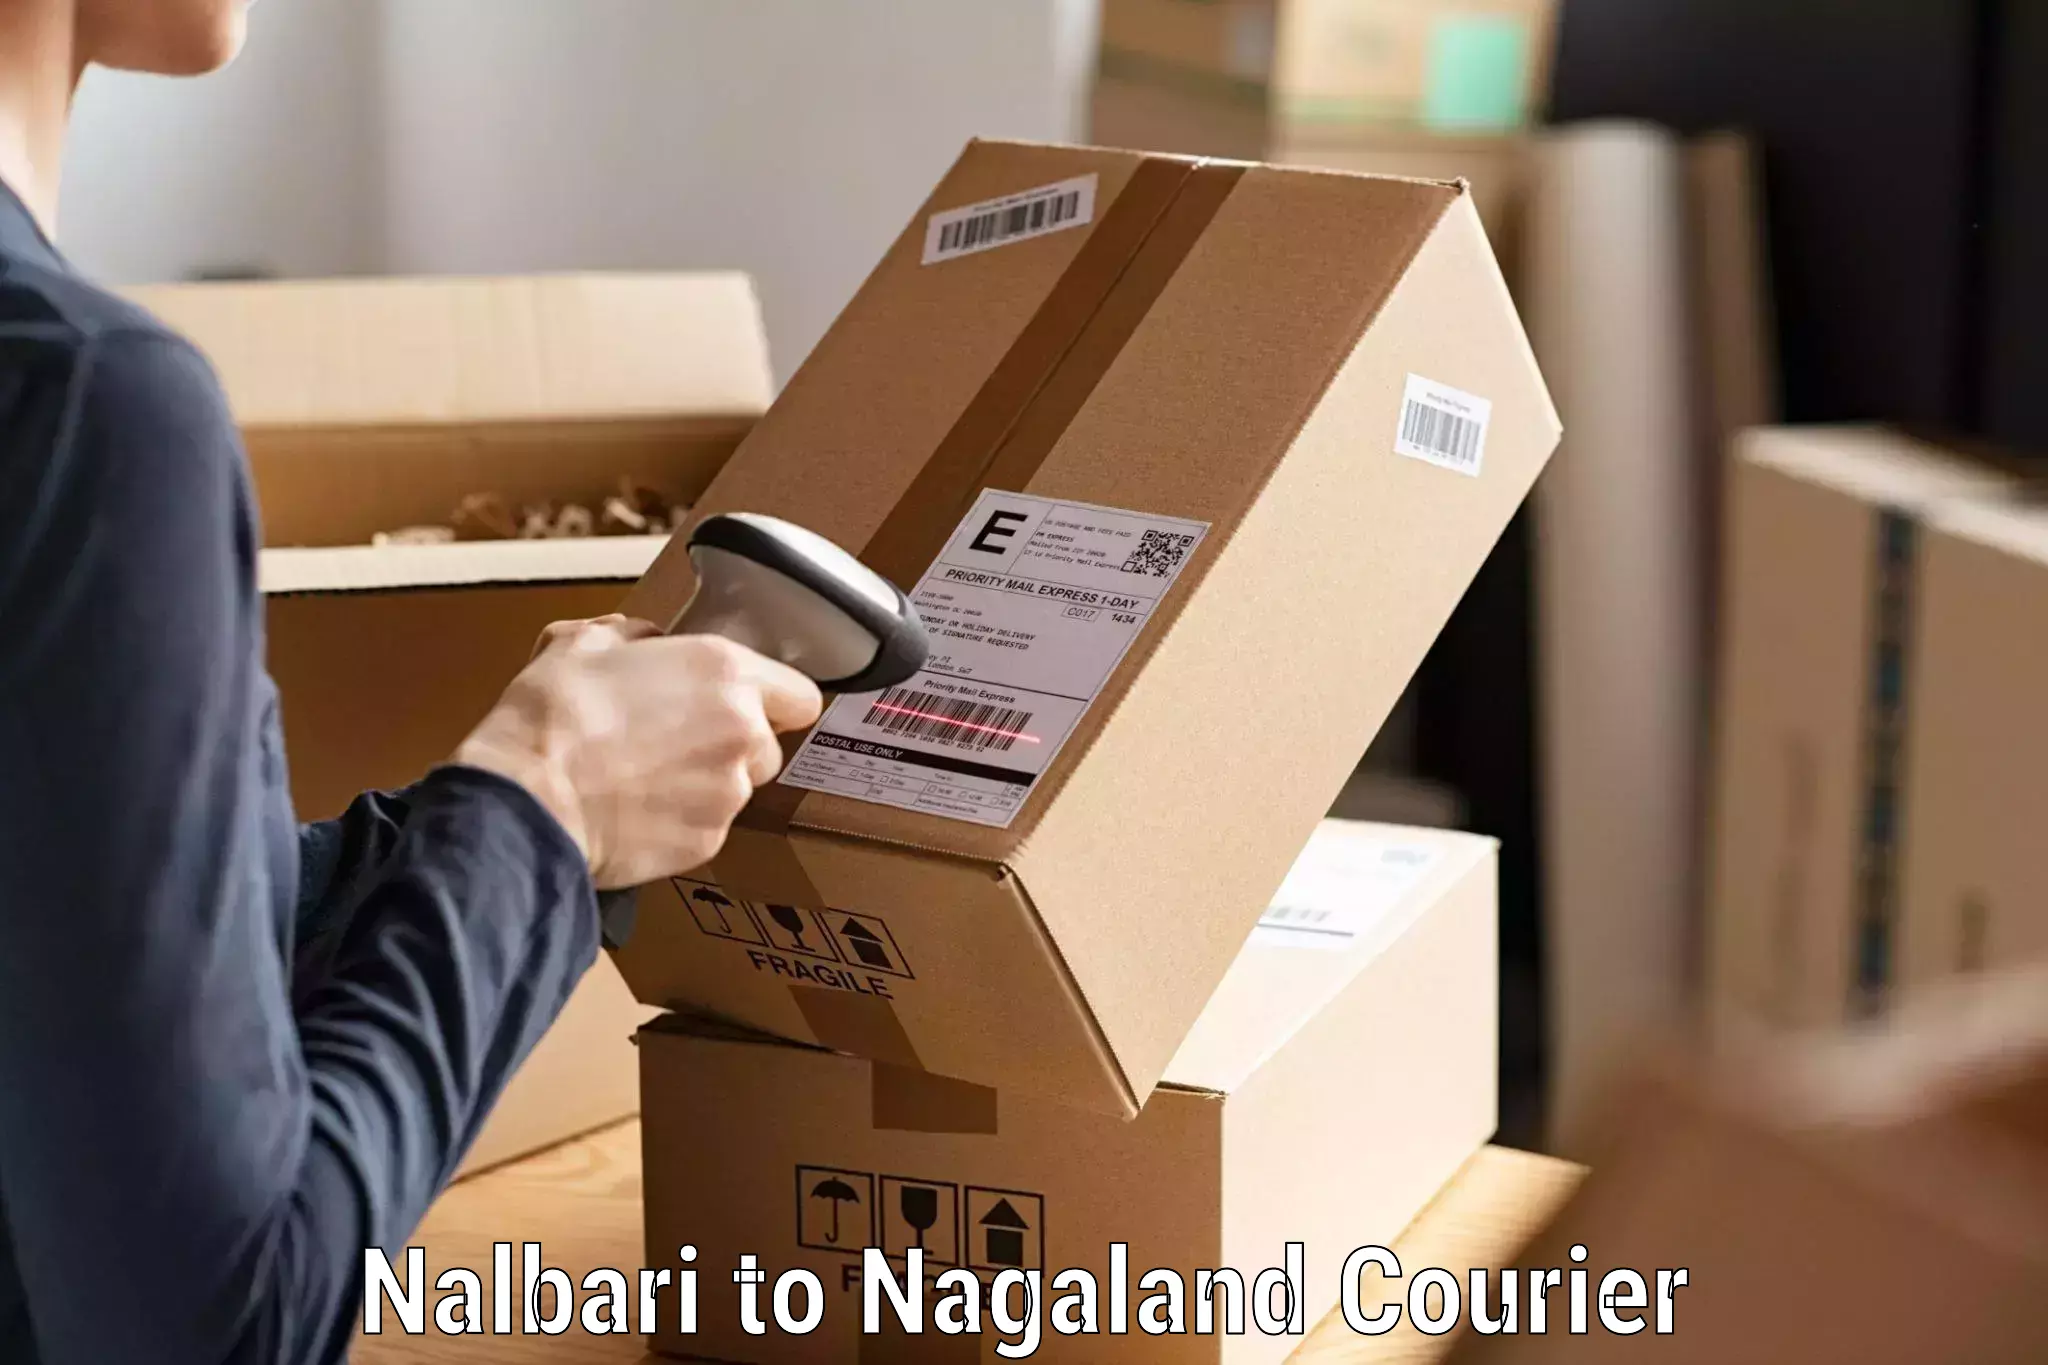 Quick dispatch service Nalbari to Dimapur